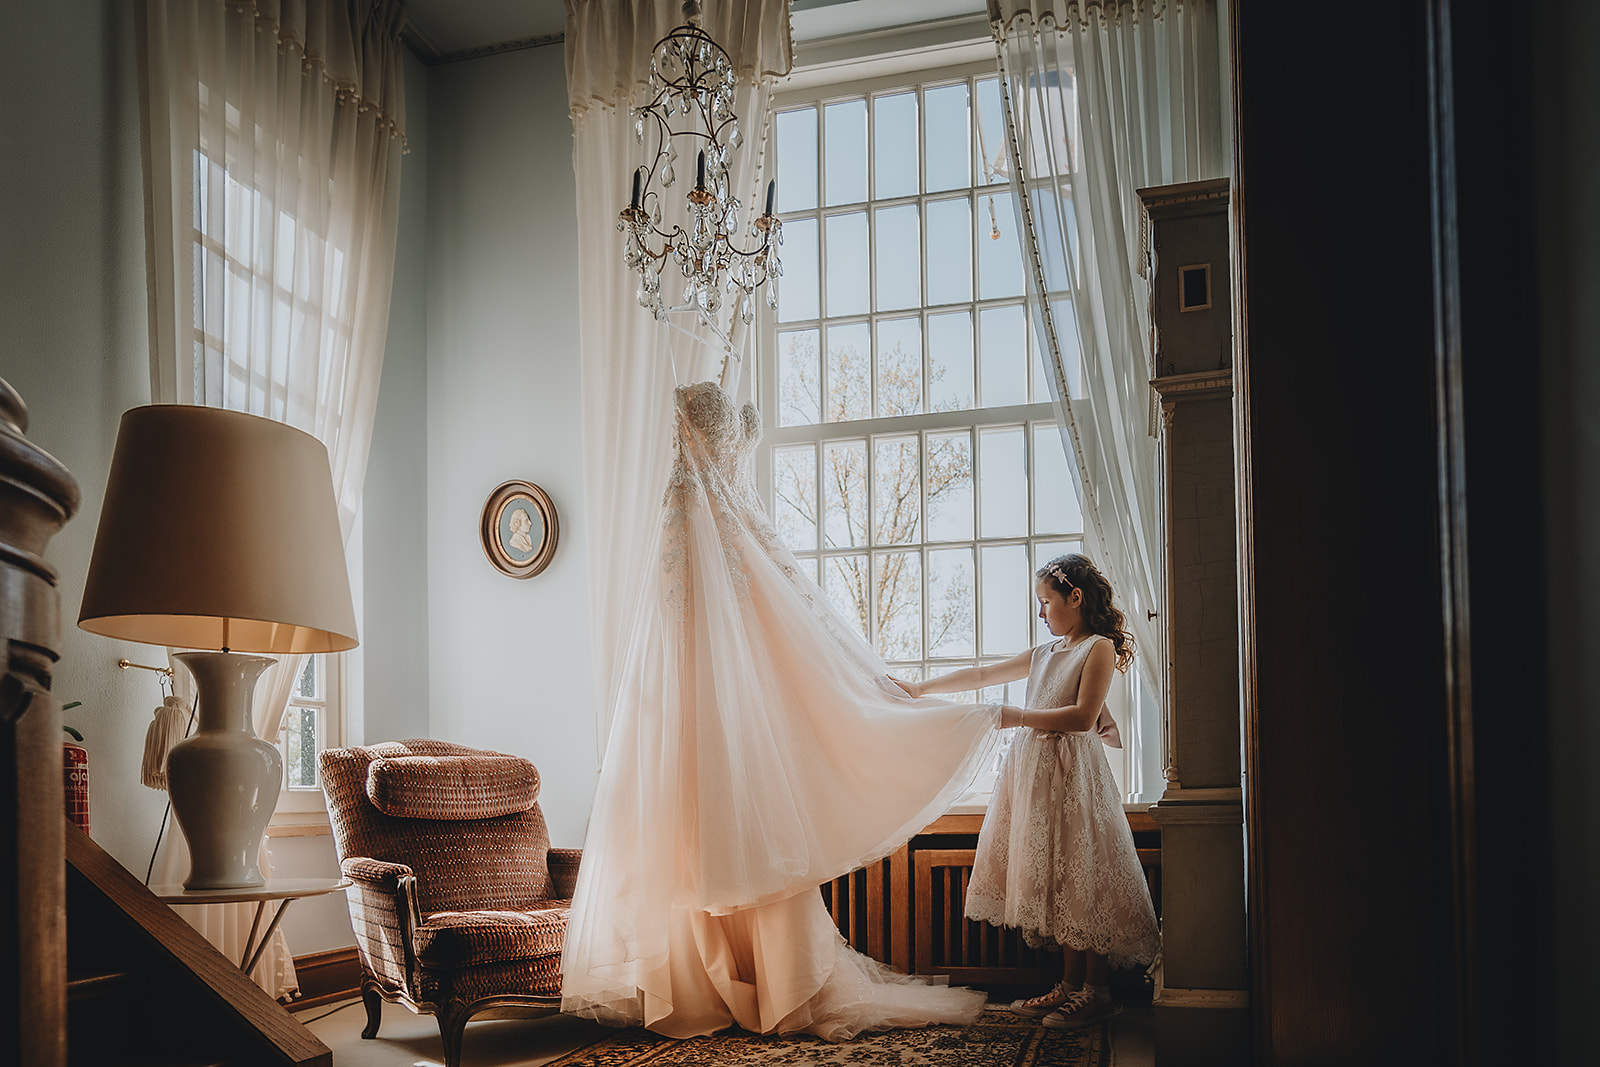 award winning foto van bruidsmeisje met trouwjurk Bruidsfoto awards 2023 genomineerd